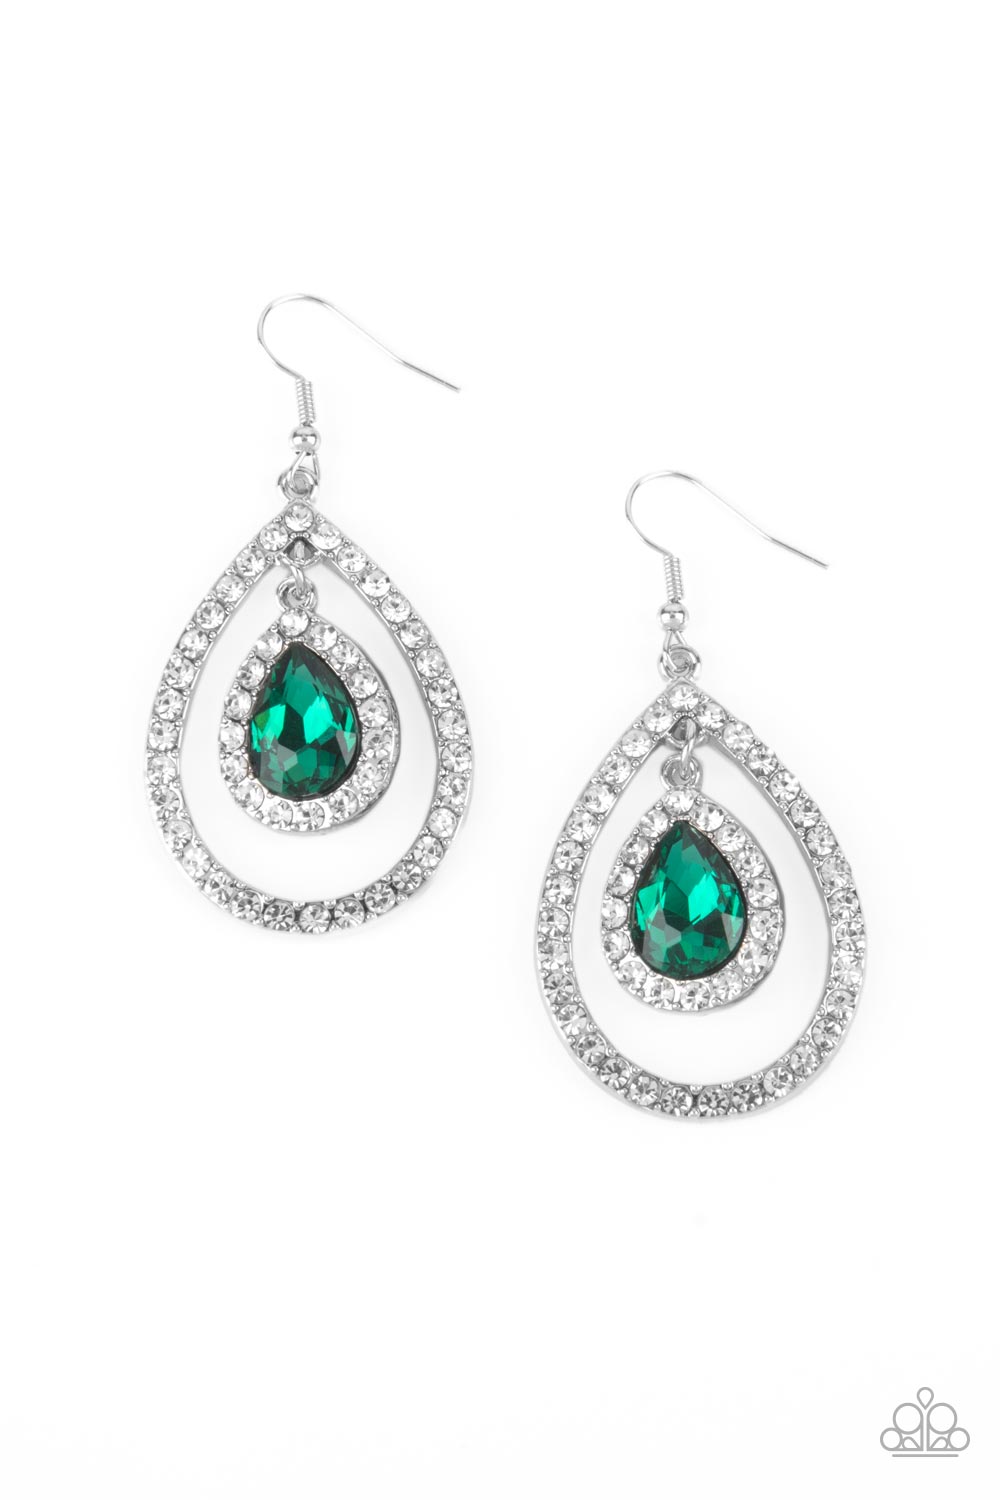 Blushing Bride Green & White Rhinestone Earrings - Paparazzi Accessories- lightbox - CarasShop.com - $5 Jewelry by Cara Jewels